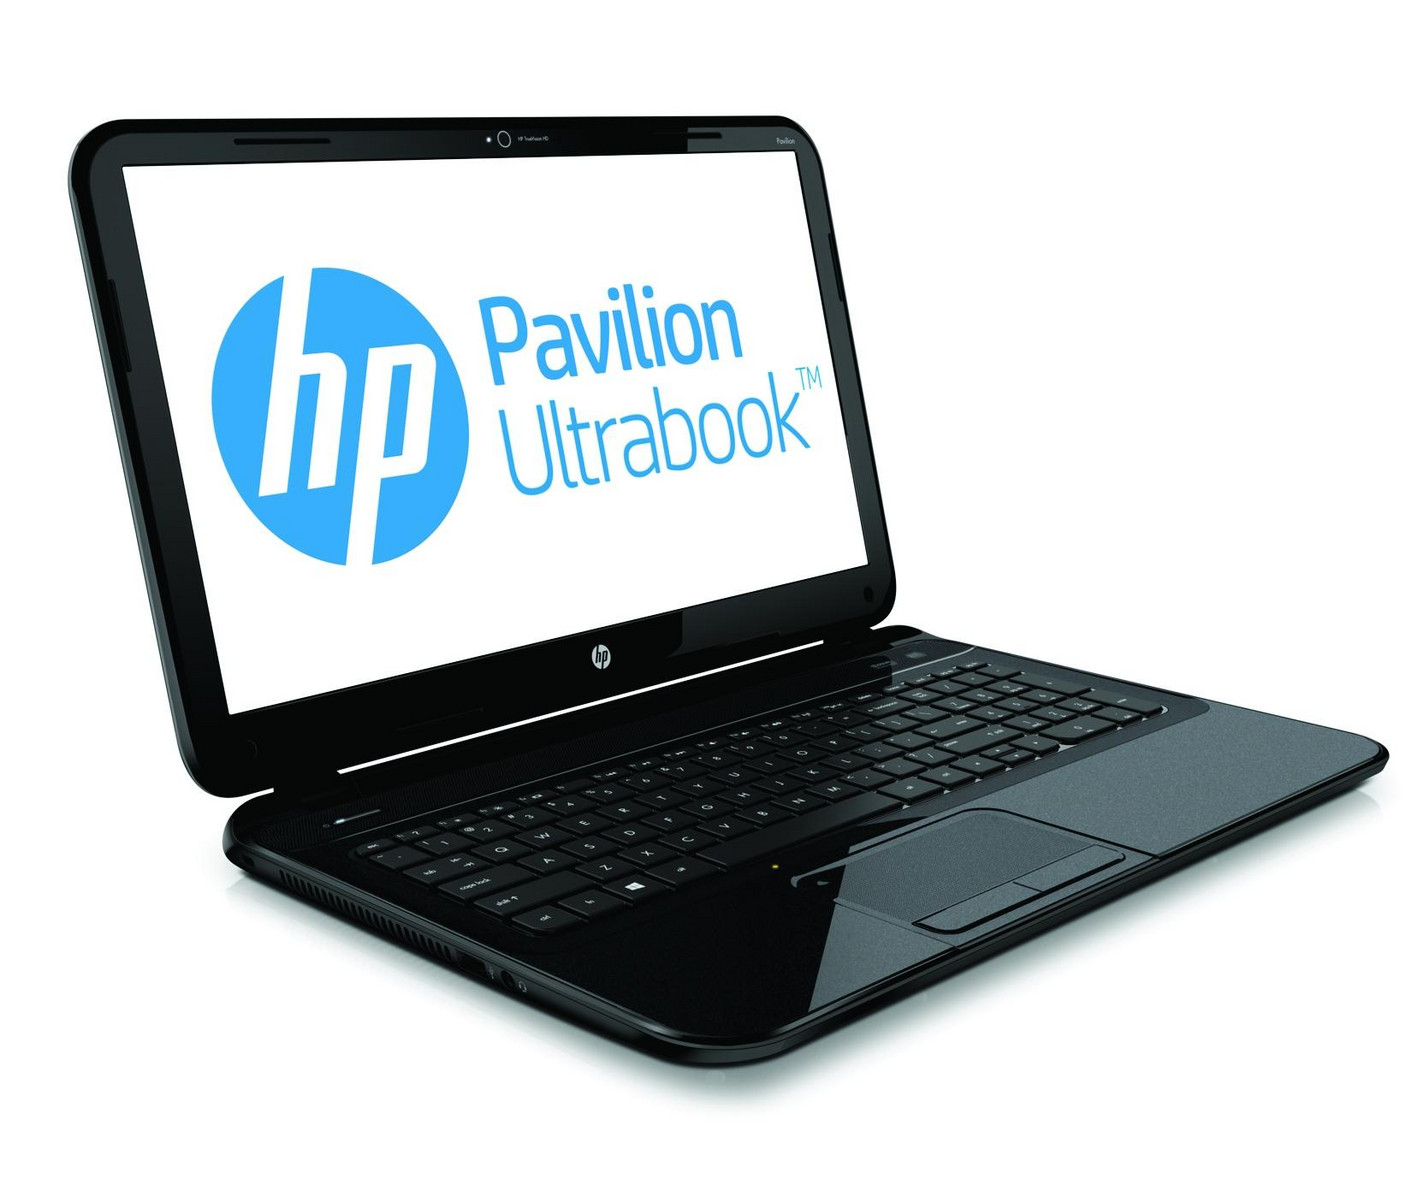  HP  Pavilion Sleekbook 15 Series Notebookcheck net 